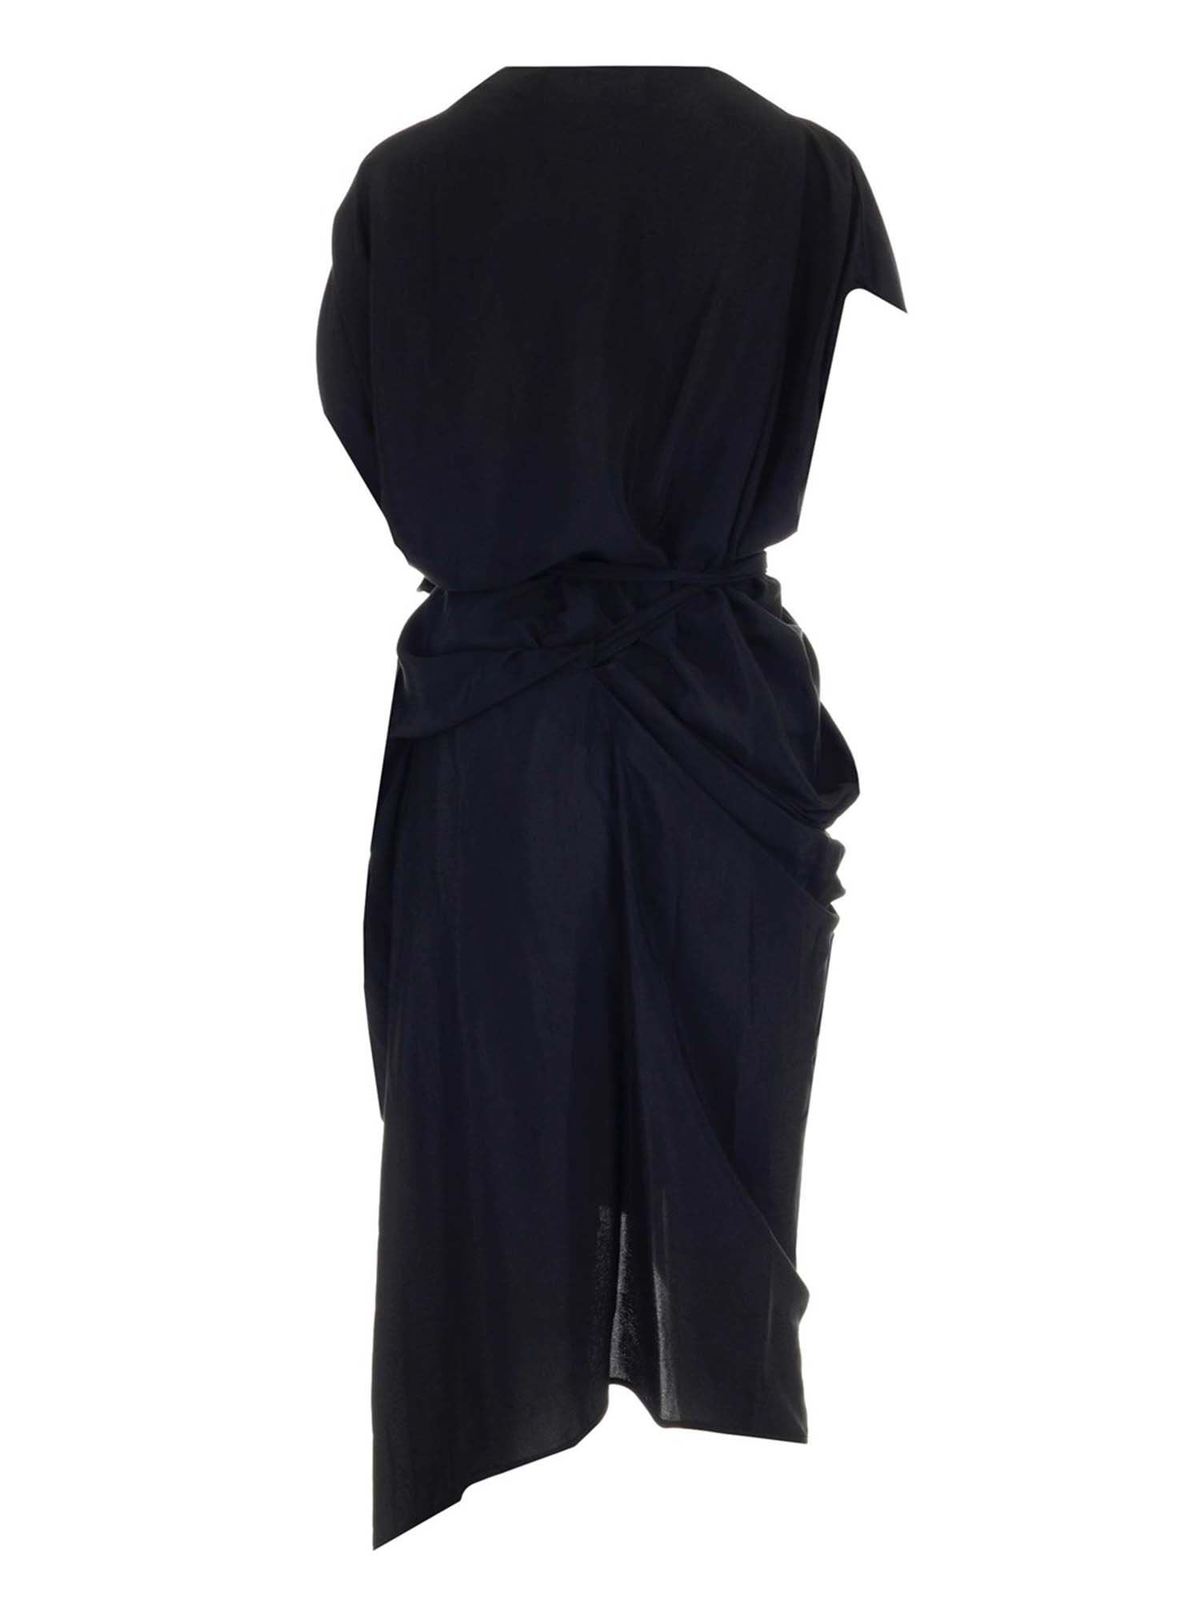 Vivienne Westwood - Johanna dress in black - maxi dresses ...